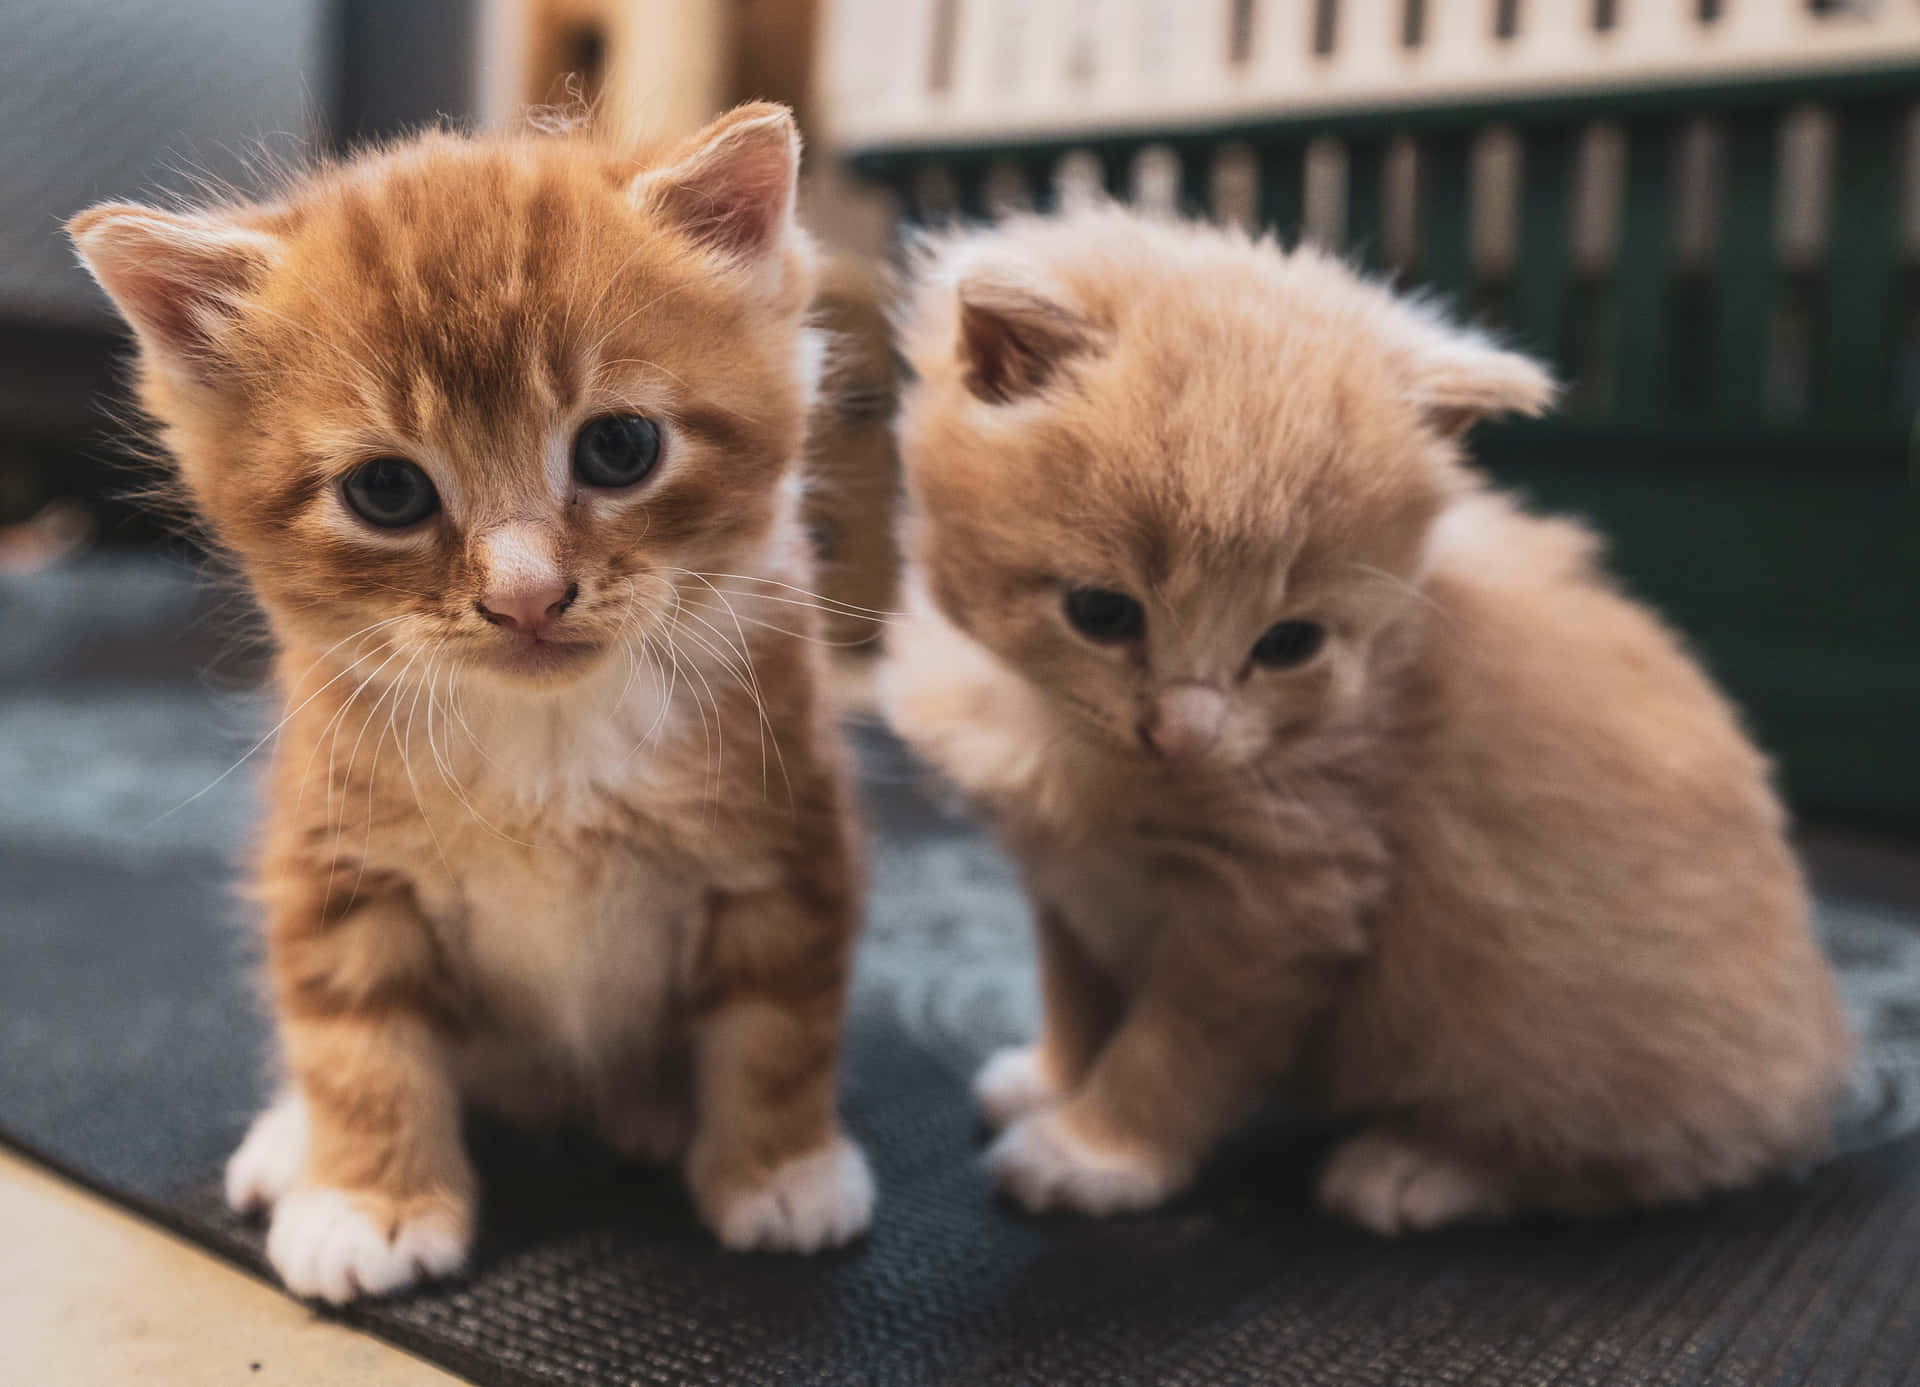 Two Orange Kittens Sitting On A Mat